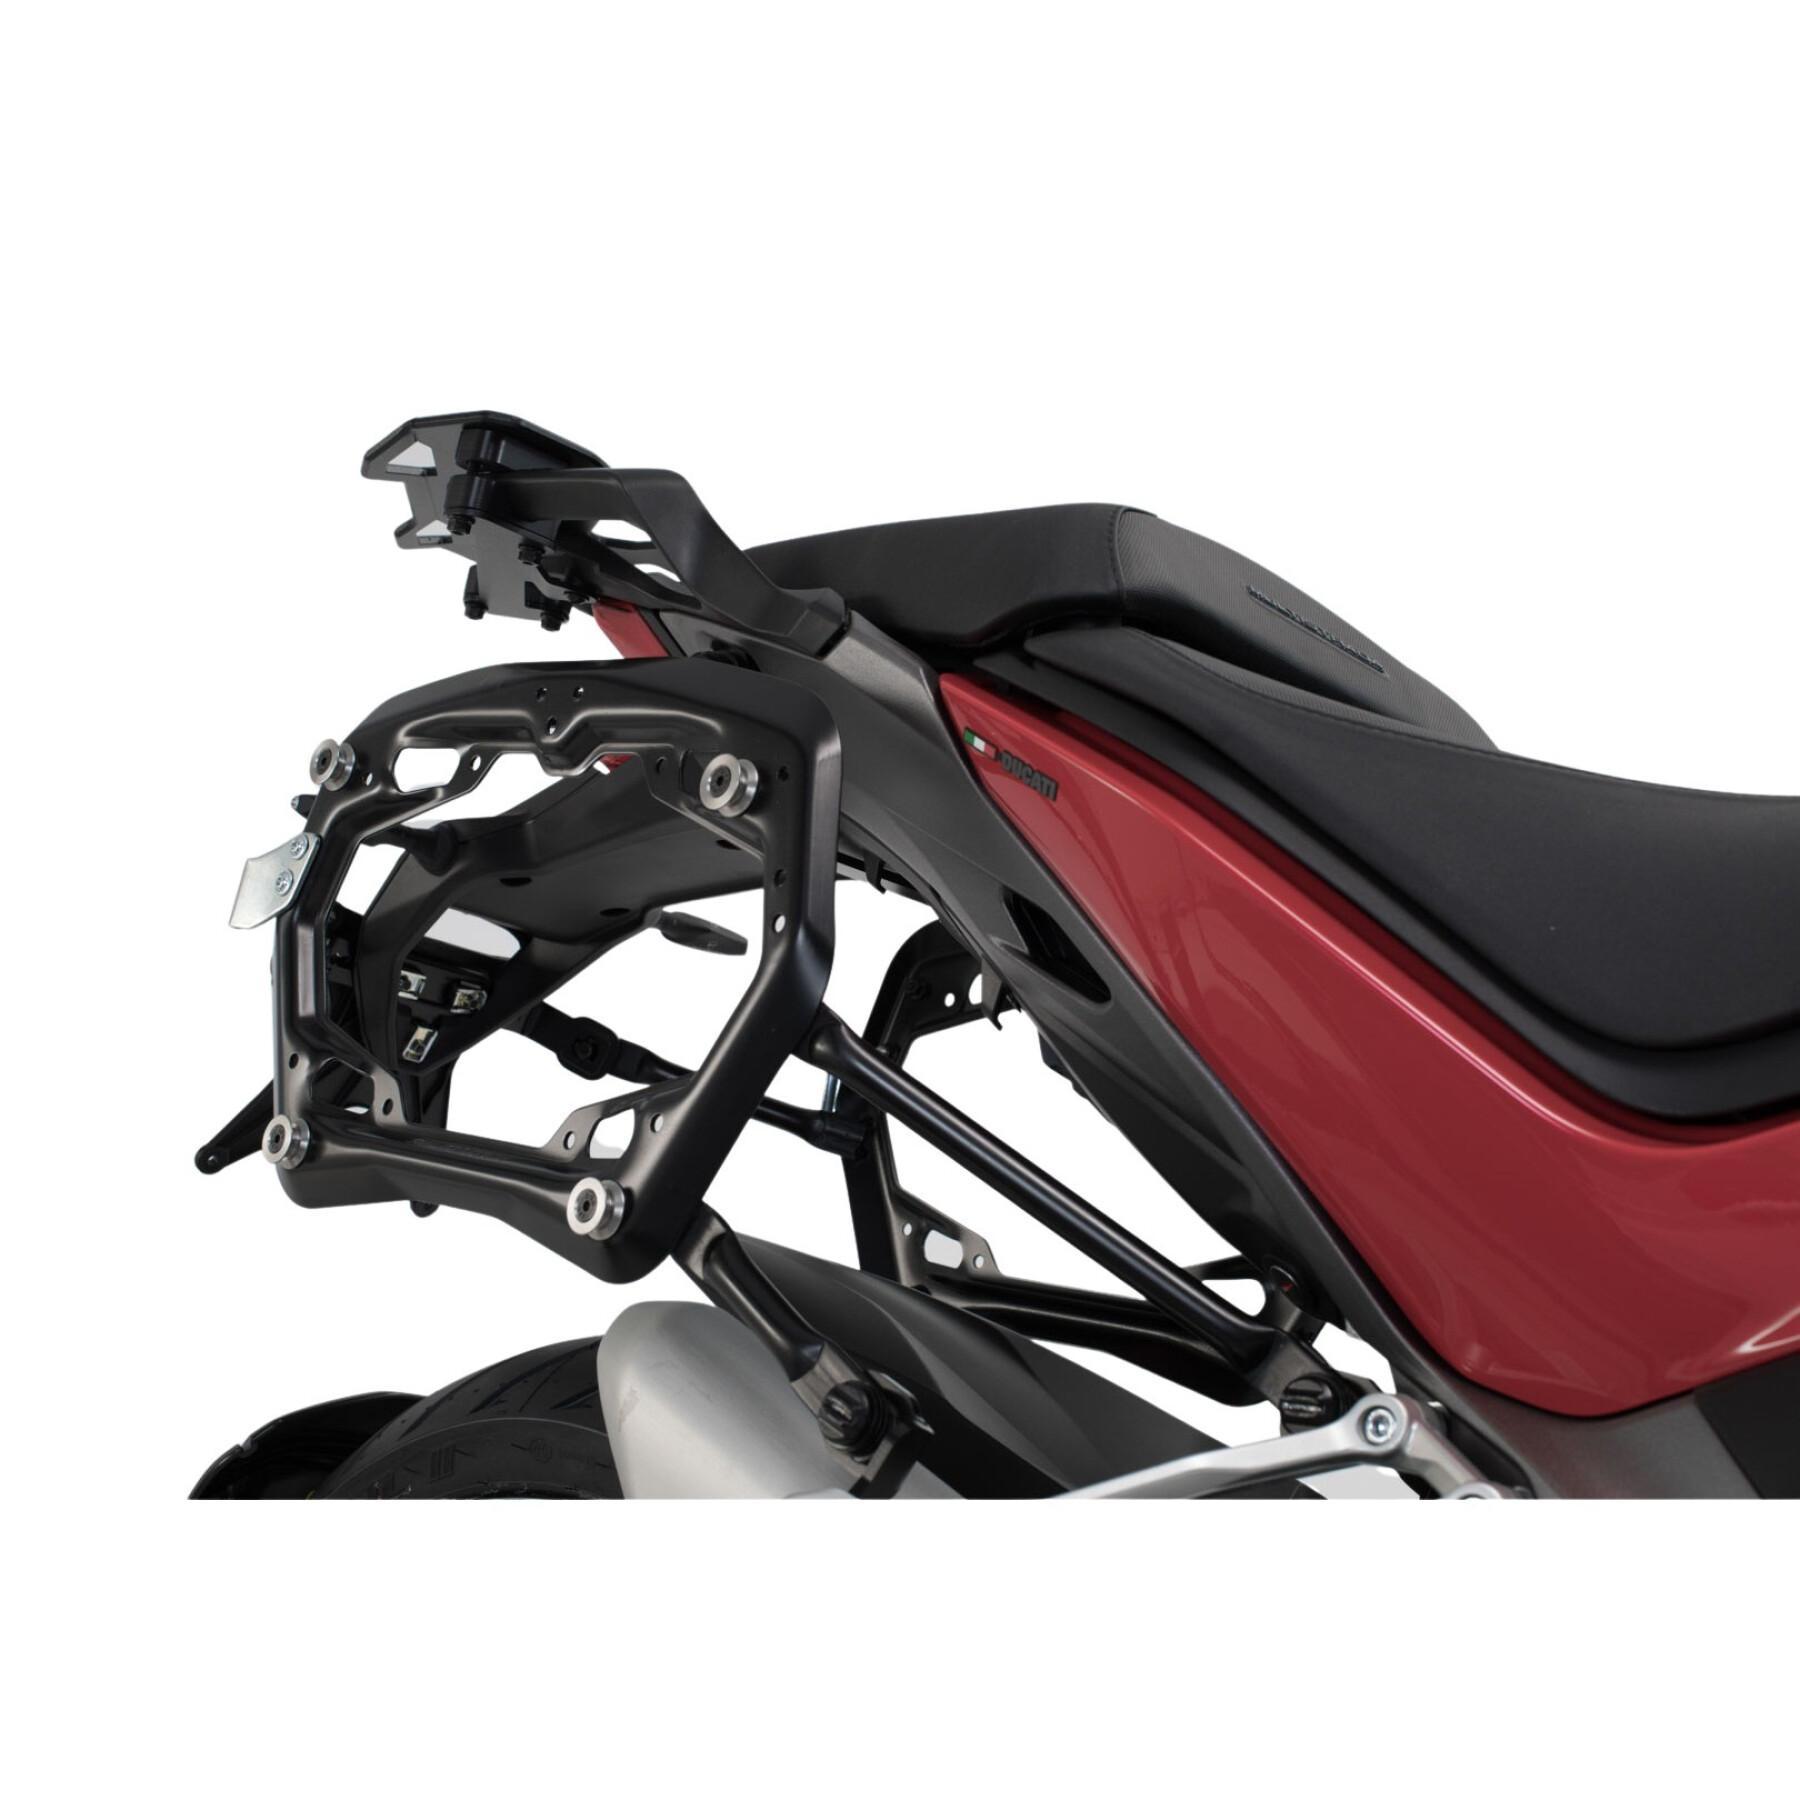 Soporte de la maleta lateral de la moto Sw-Motech Pro. Ducati Multistrada 1260 (18-)